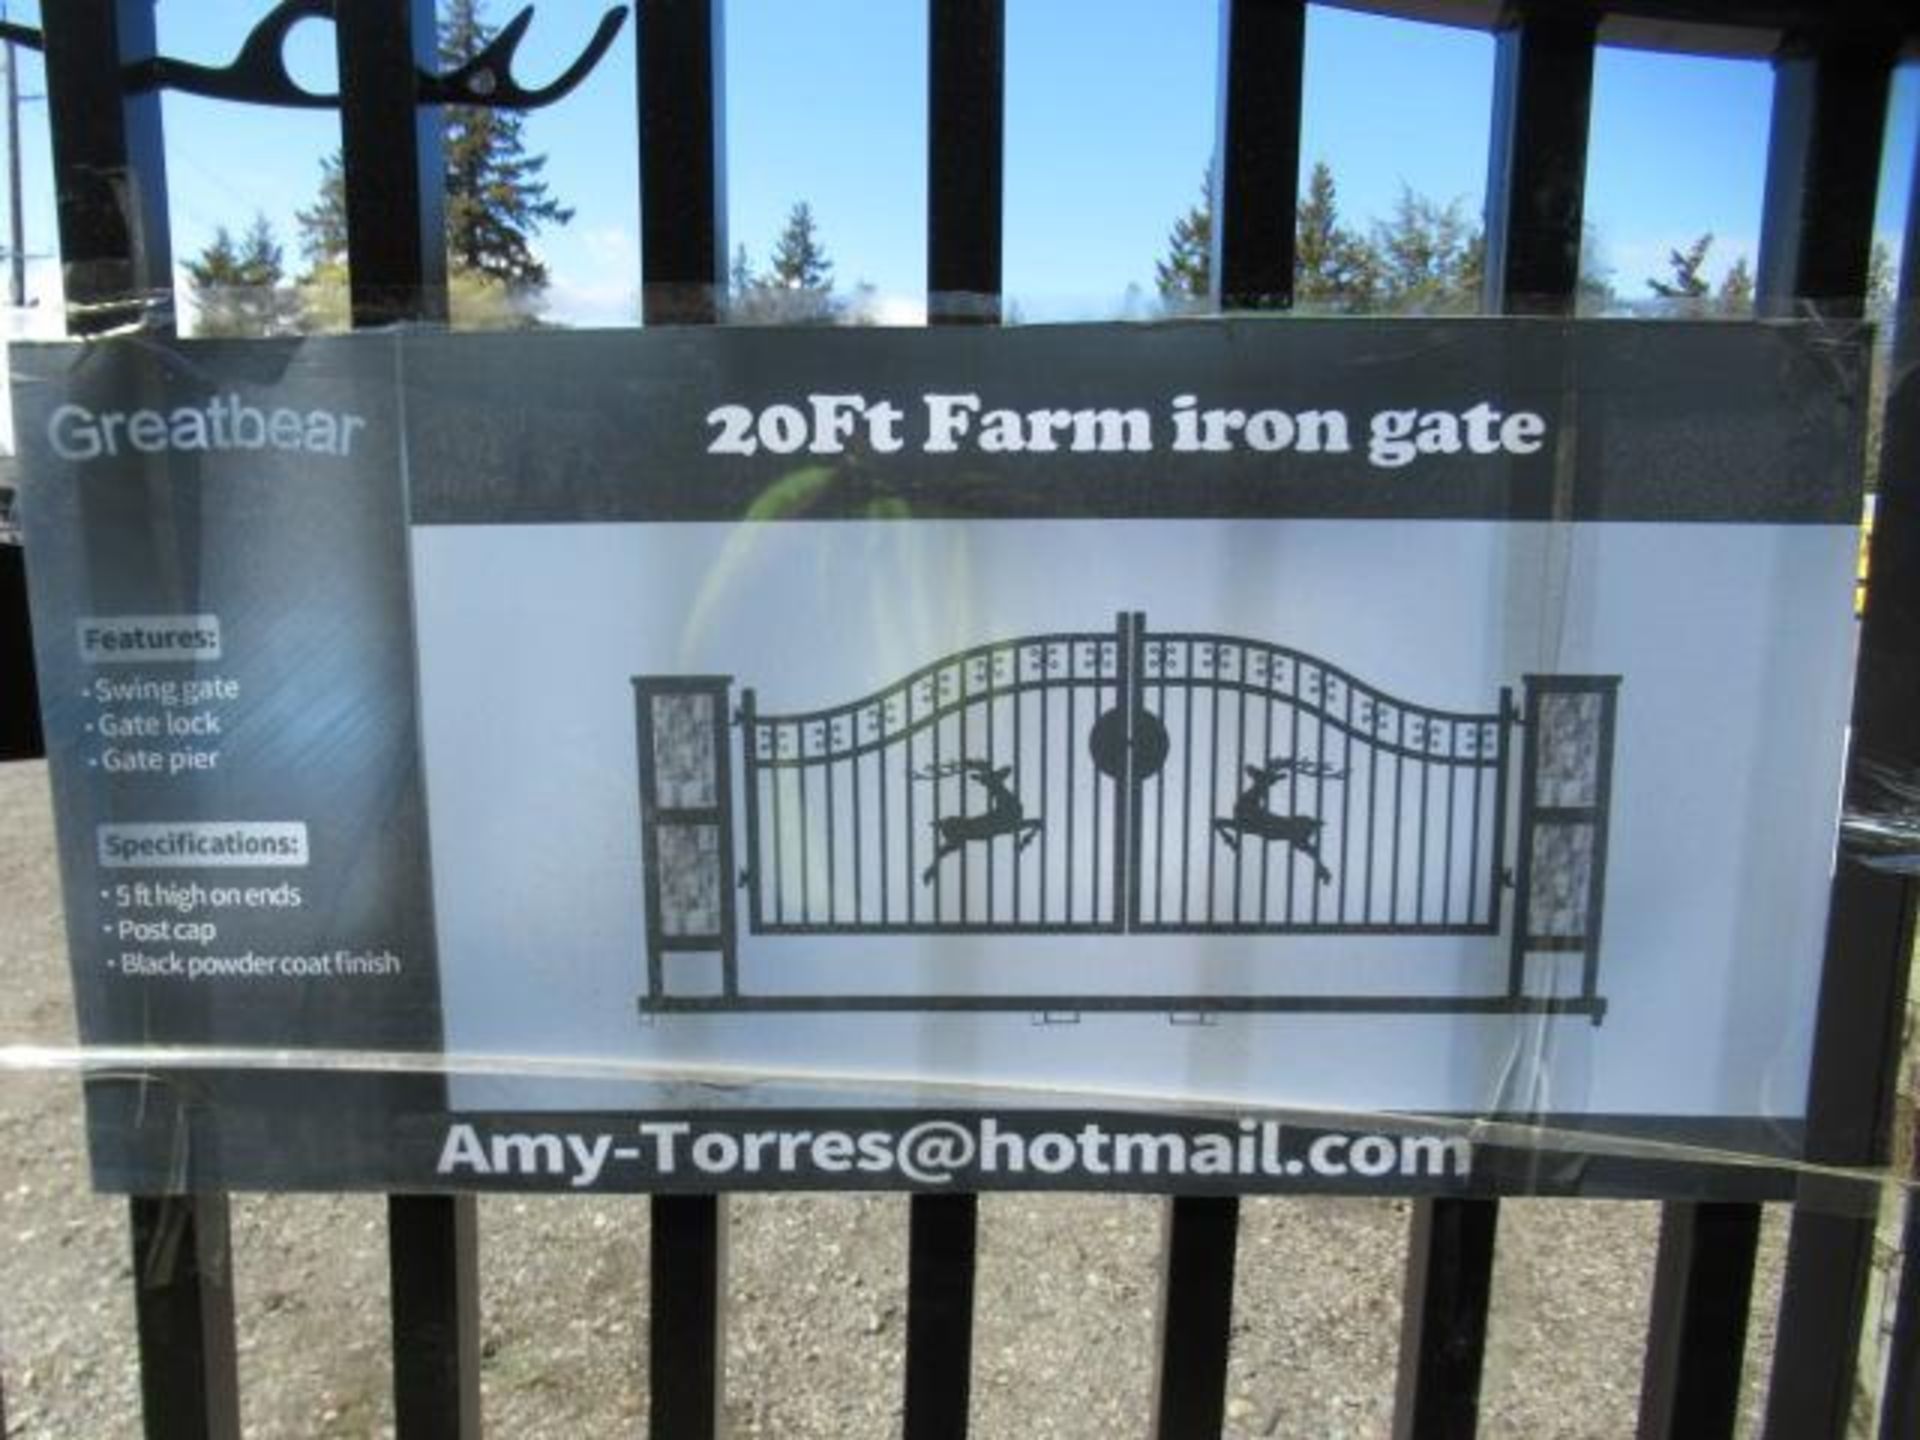 GREATBEAR 20' FARM IRON SWING GATE W/ SIDE PILLARS, POWDER COAT FINISH, GATE LATCH, & DEER ARTWORK - Image 4 of 4